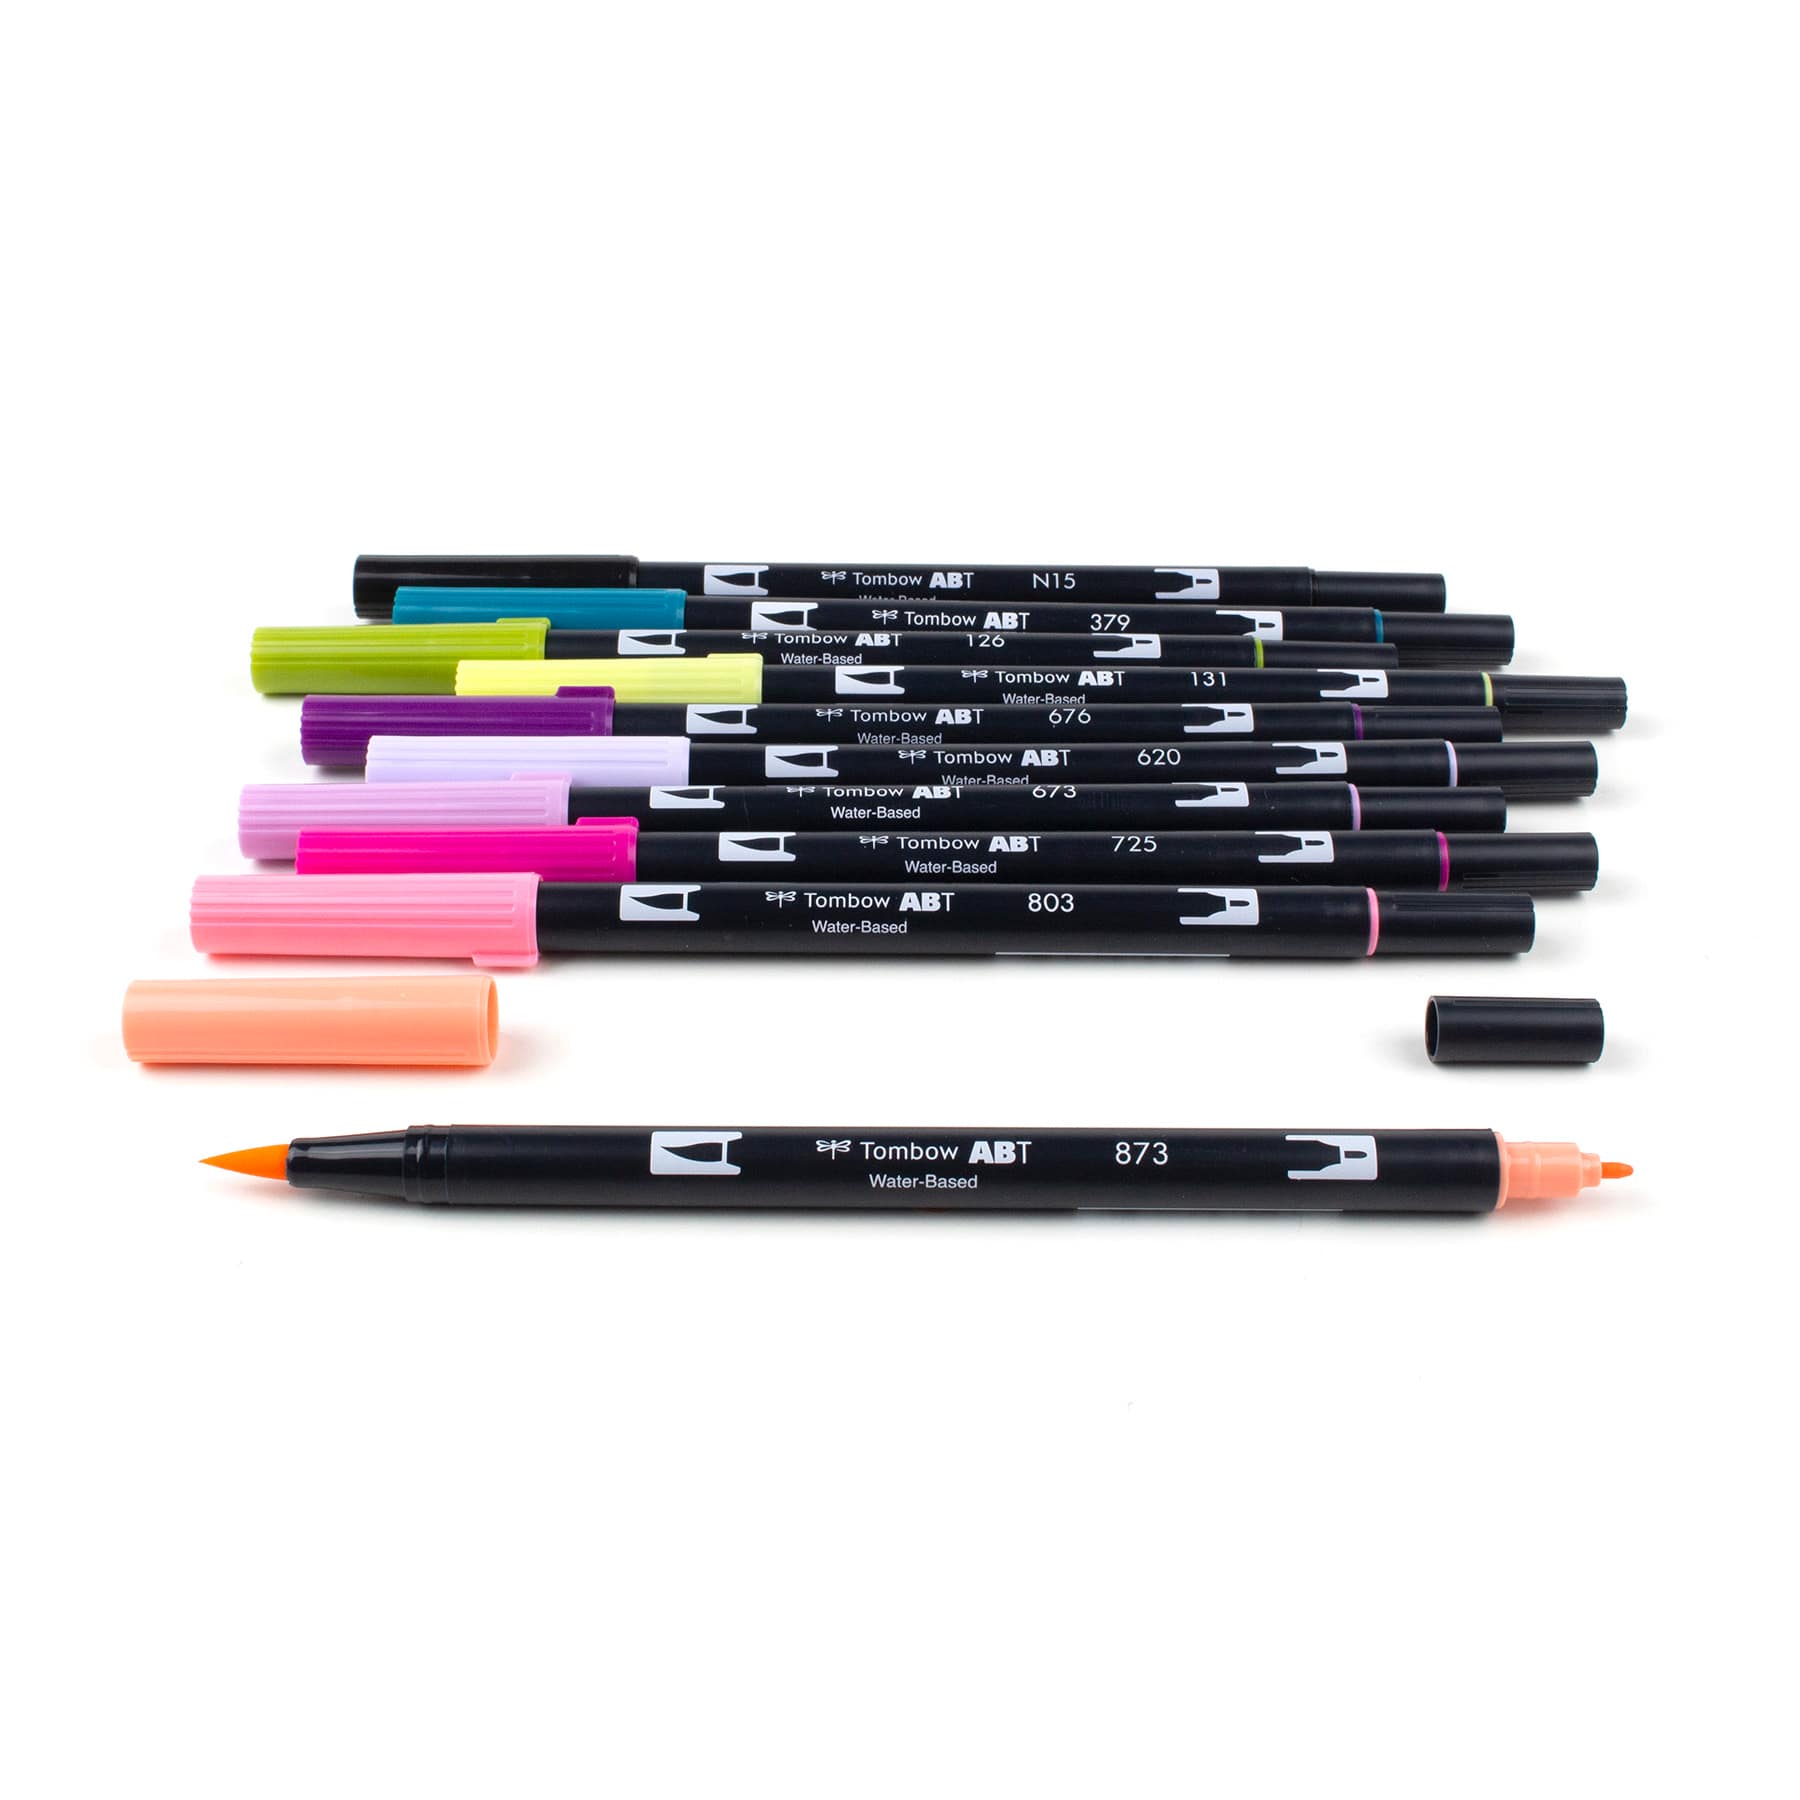 6 Packs: 10 ct. (60 total) Tombow Lettering Favorites Dual Brush Pens